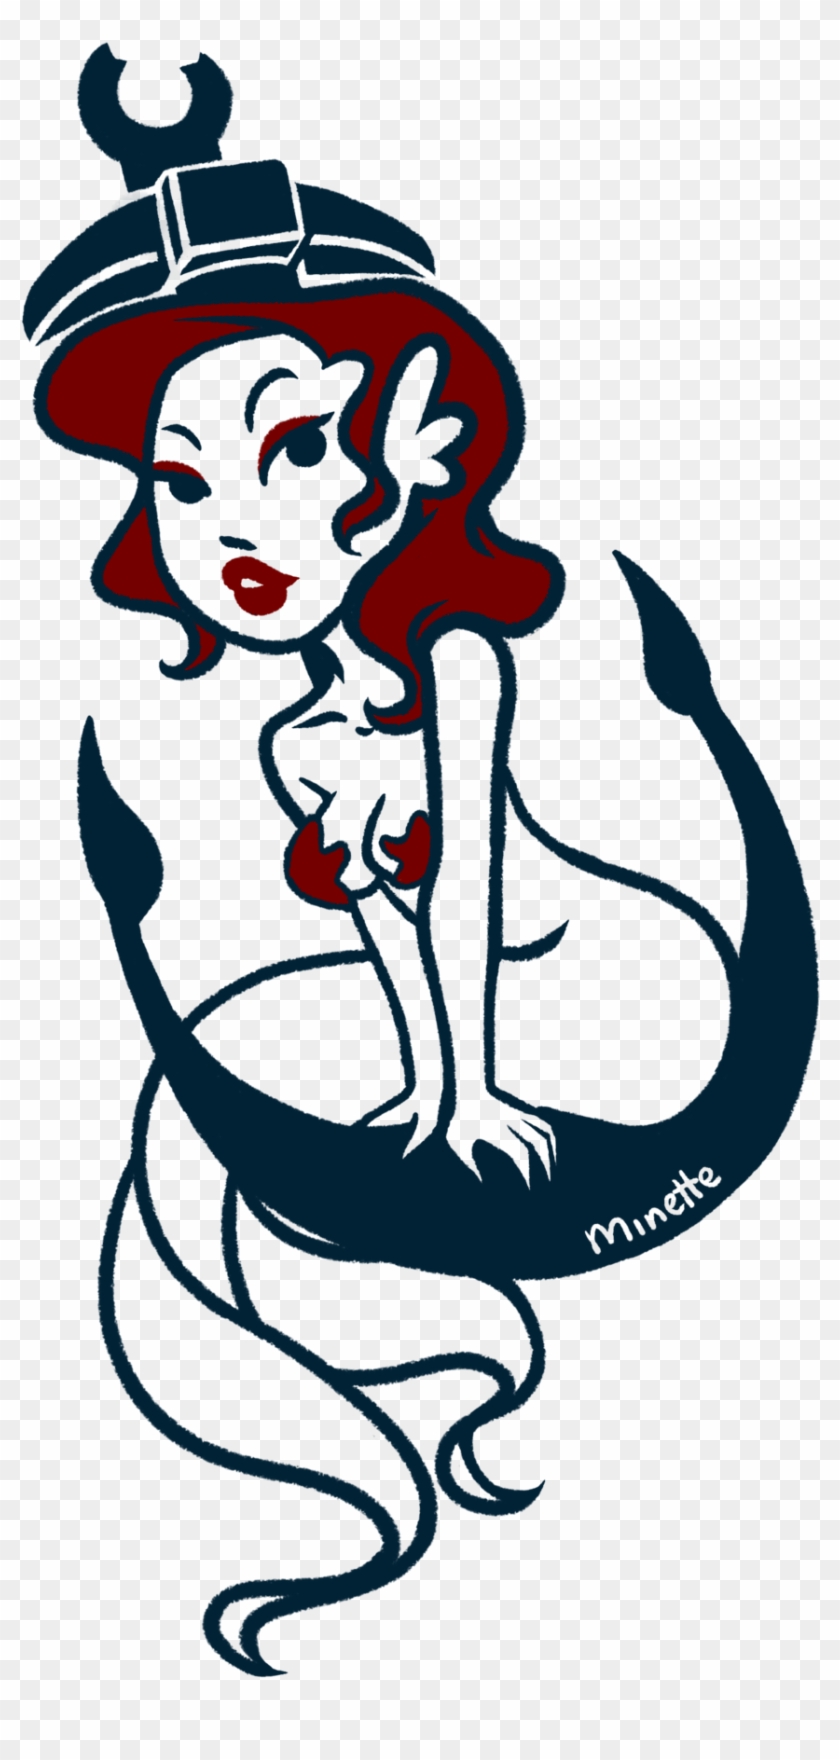 Mermaid Tattoo Design For My Husband's Pirate Costume - Mermaid Tattoo Design For My Husband's Pirate Costume #1158266